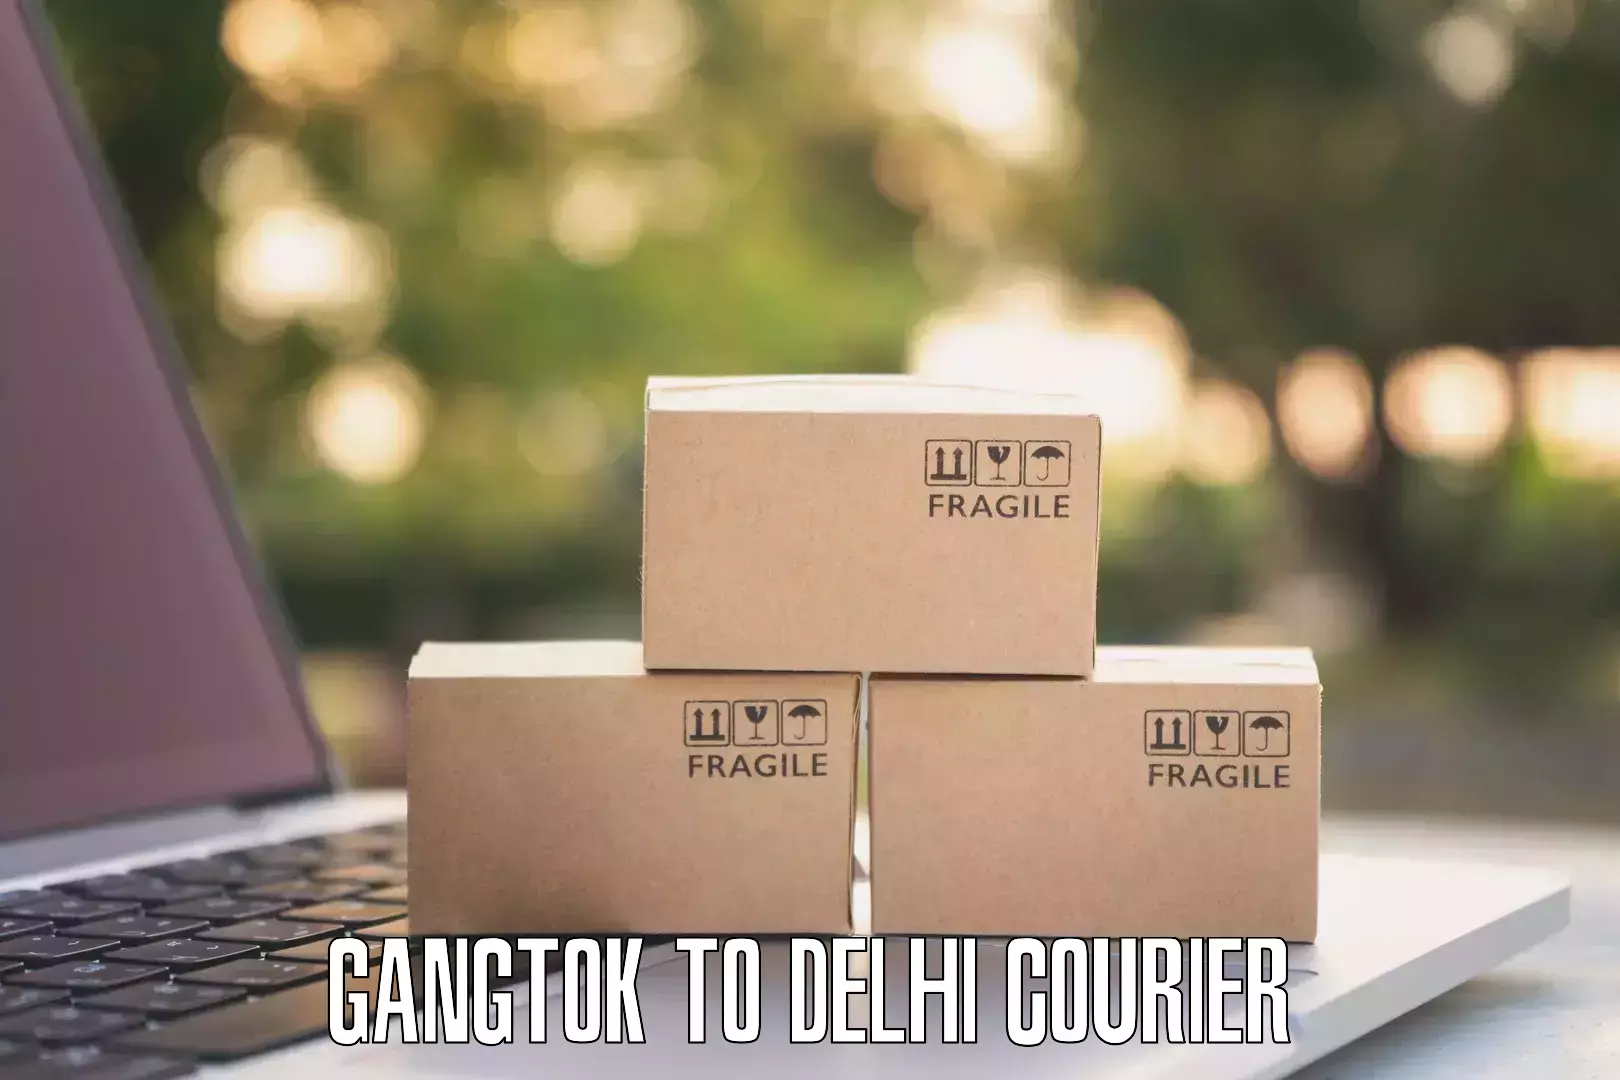 Digital courier platforms Gangtok to Burari